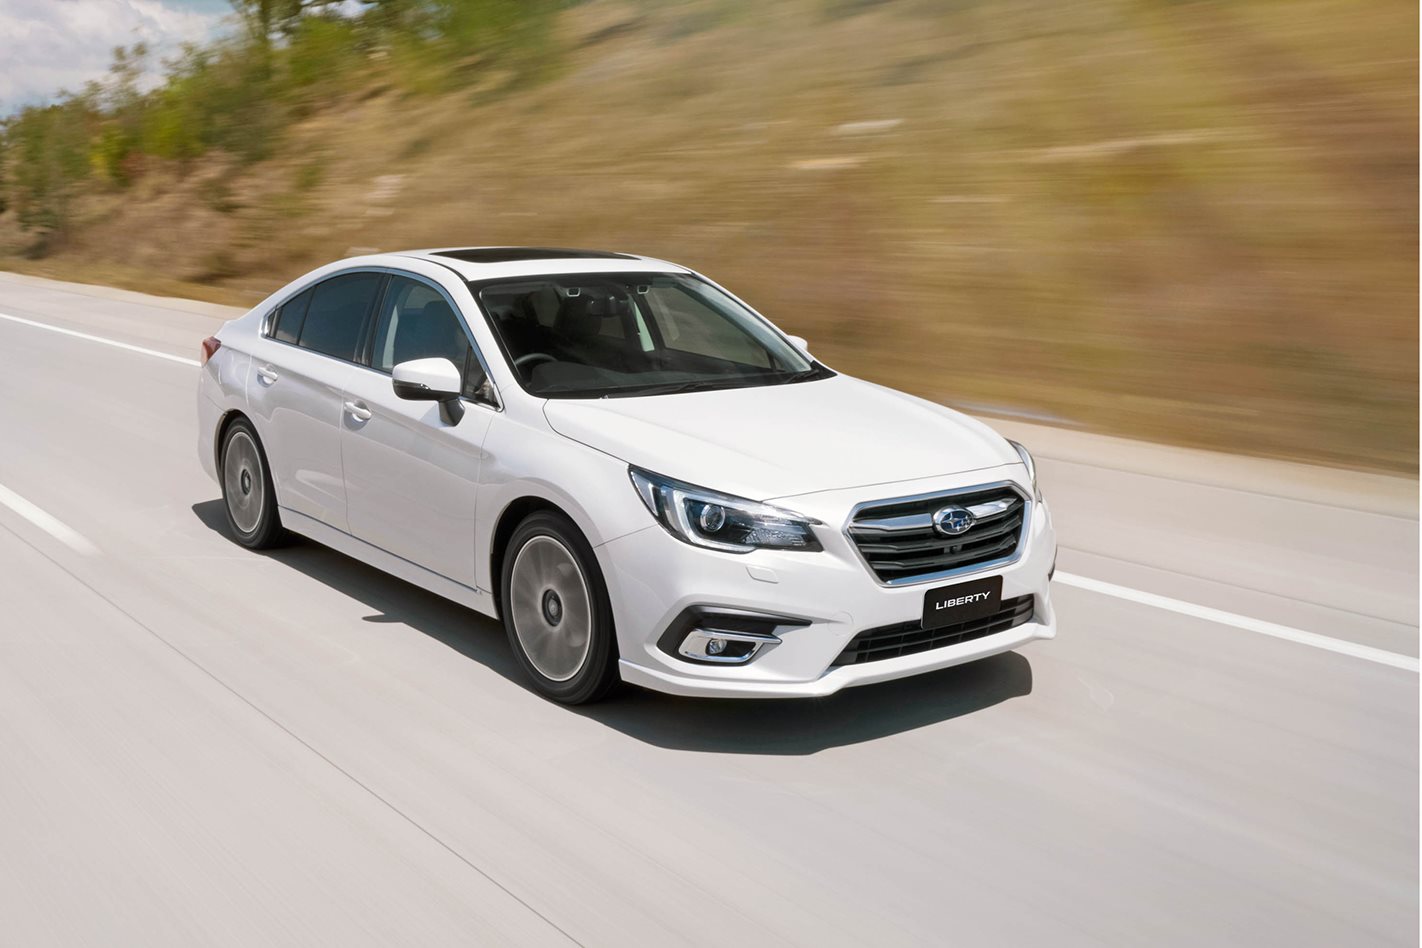 Subaru Liberty 2018 Review, Price & Features